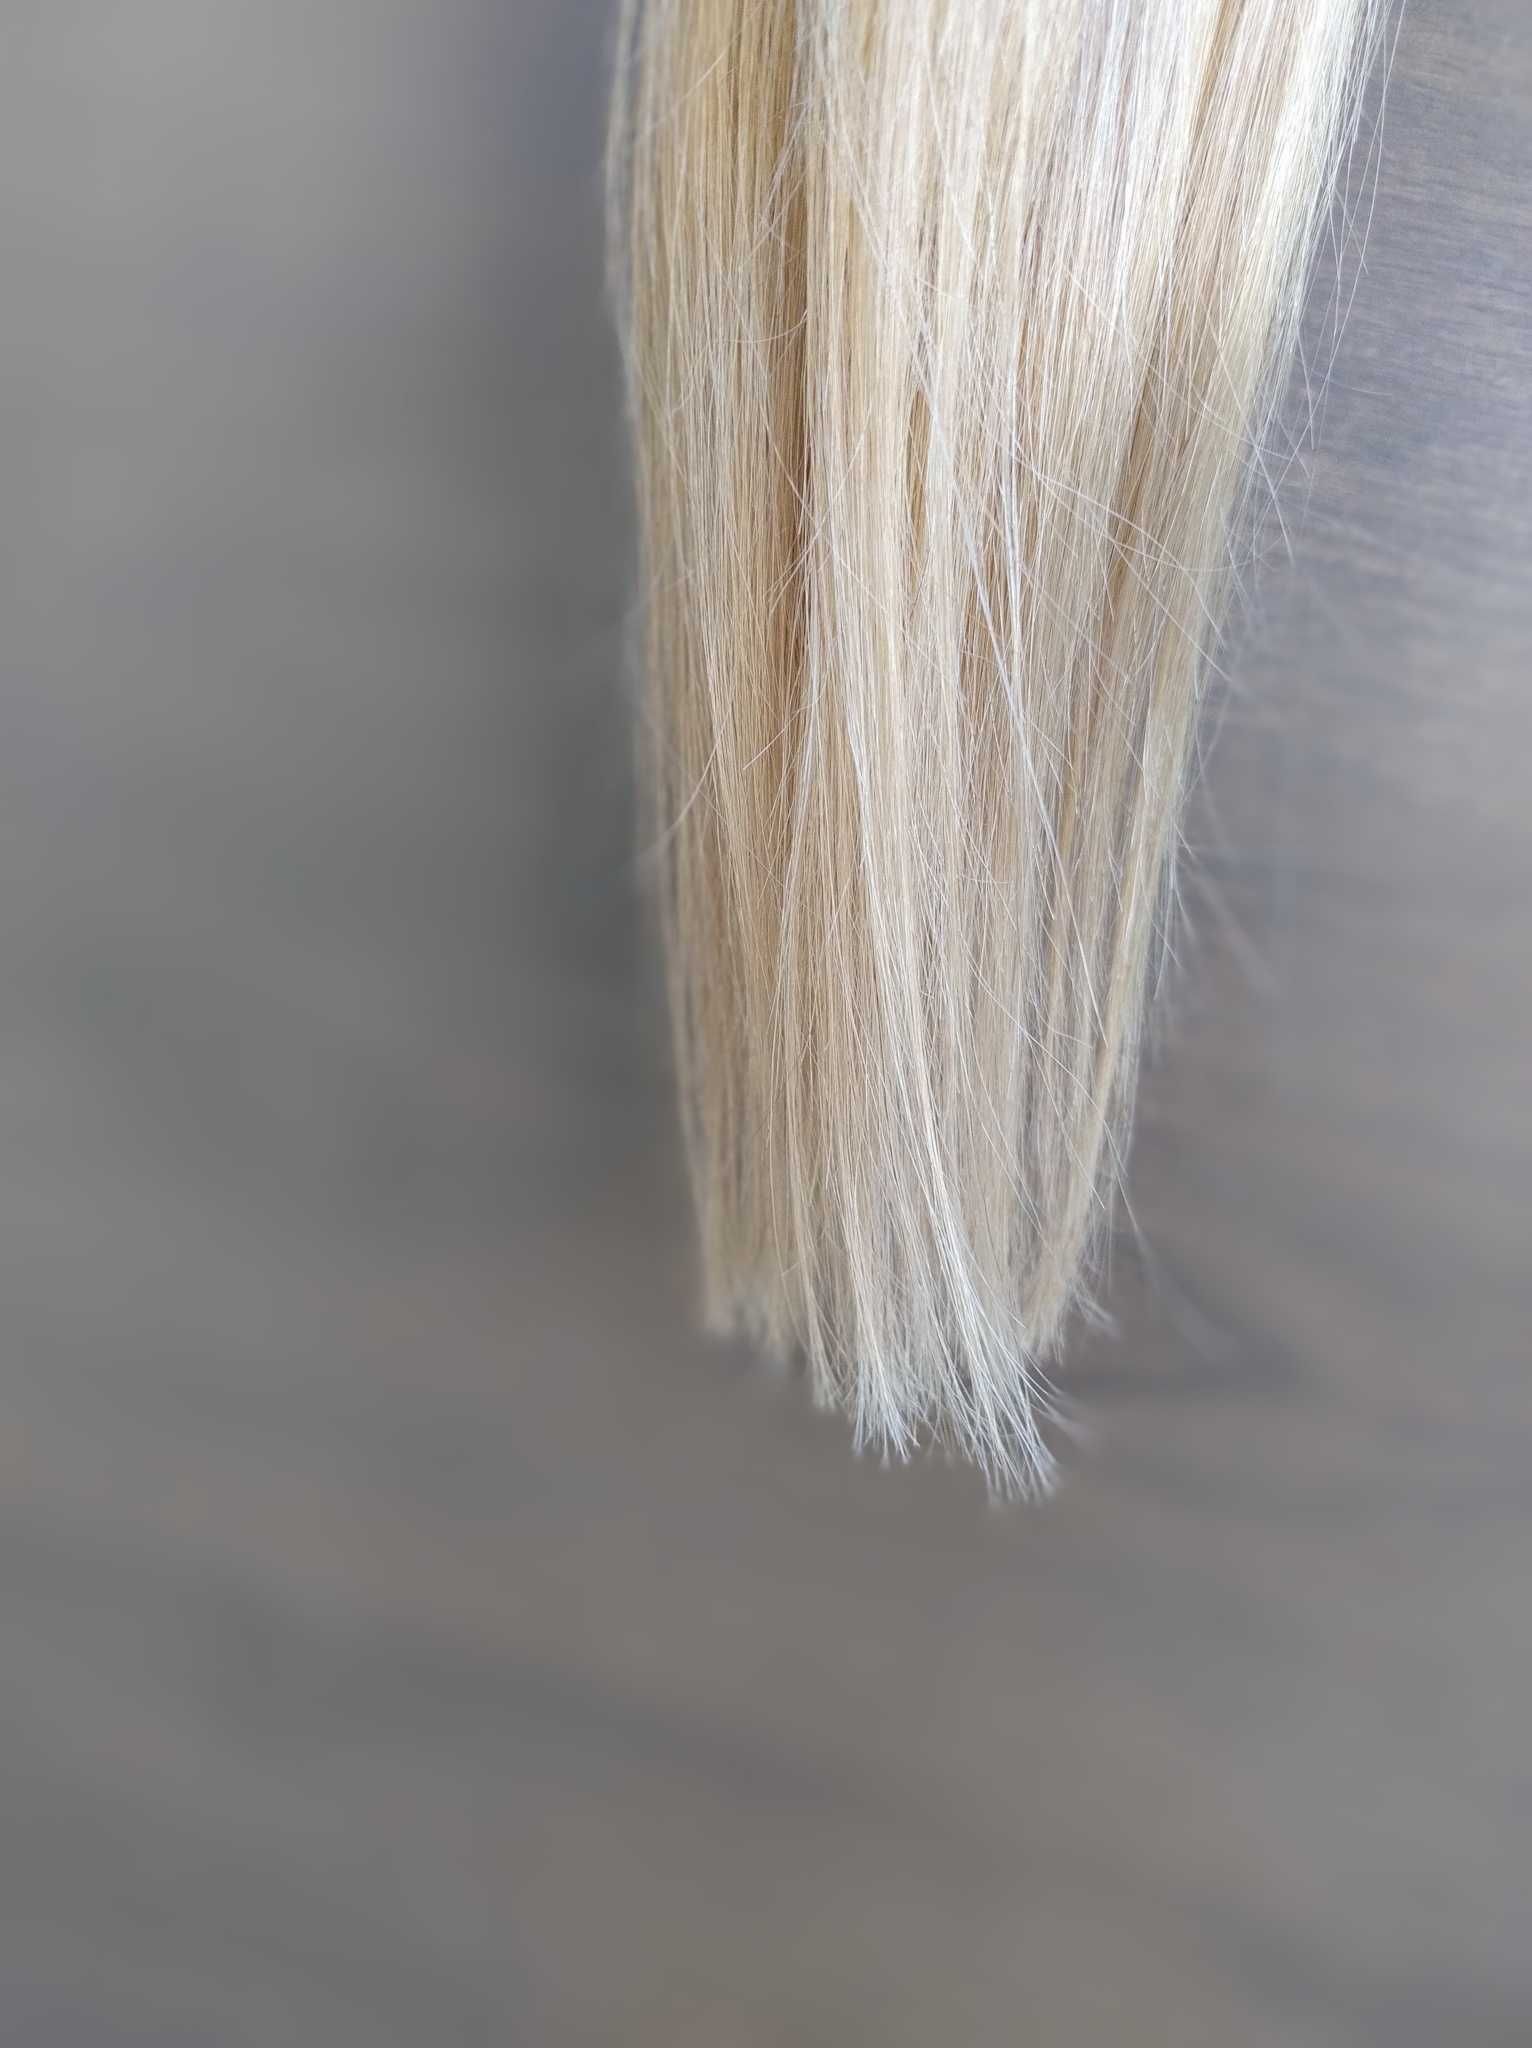 Naturalne włosy pod ringi ok 42 cm 100 pasm numer #18